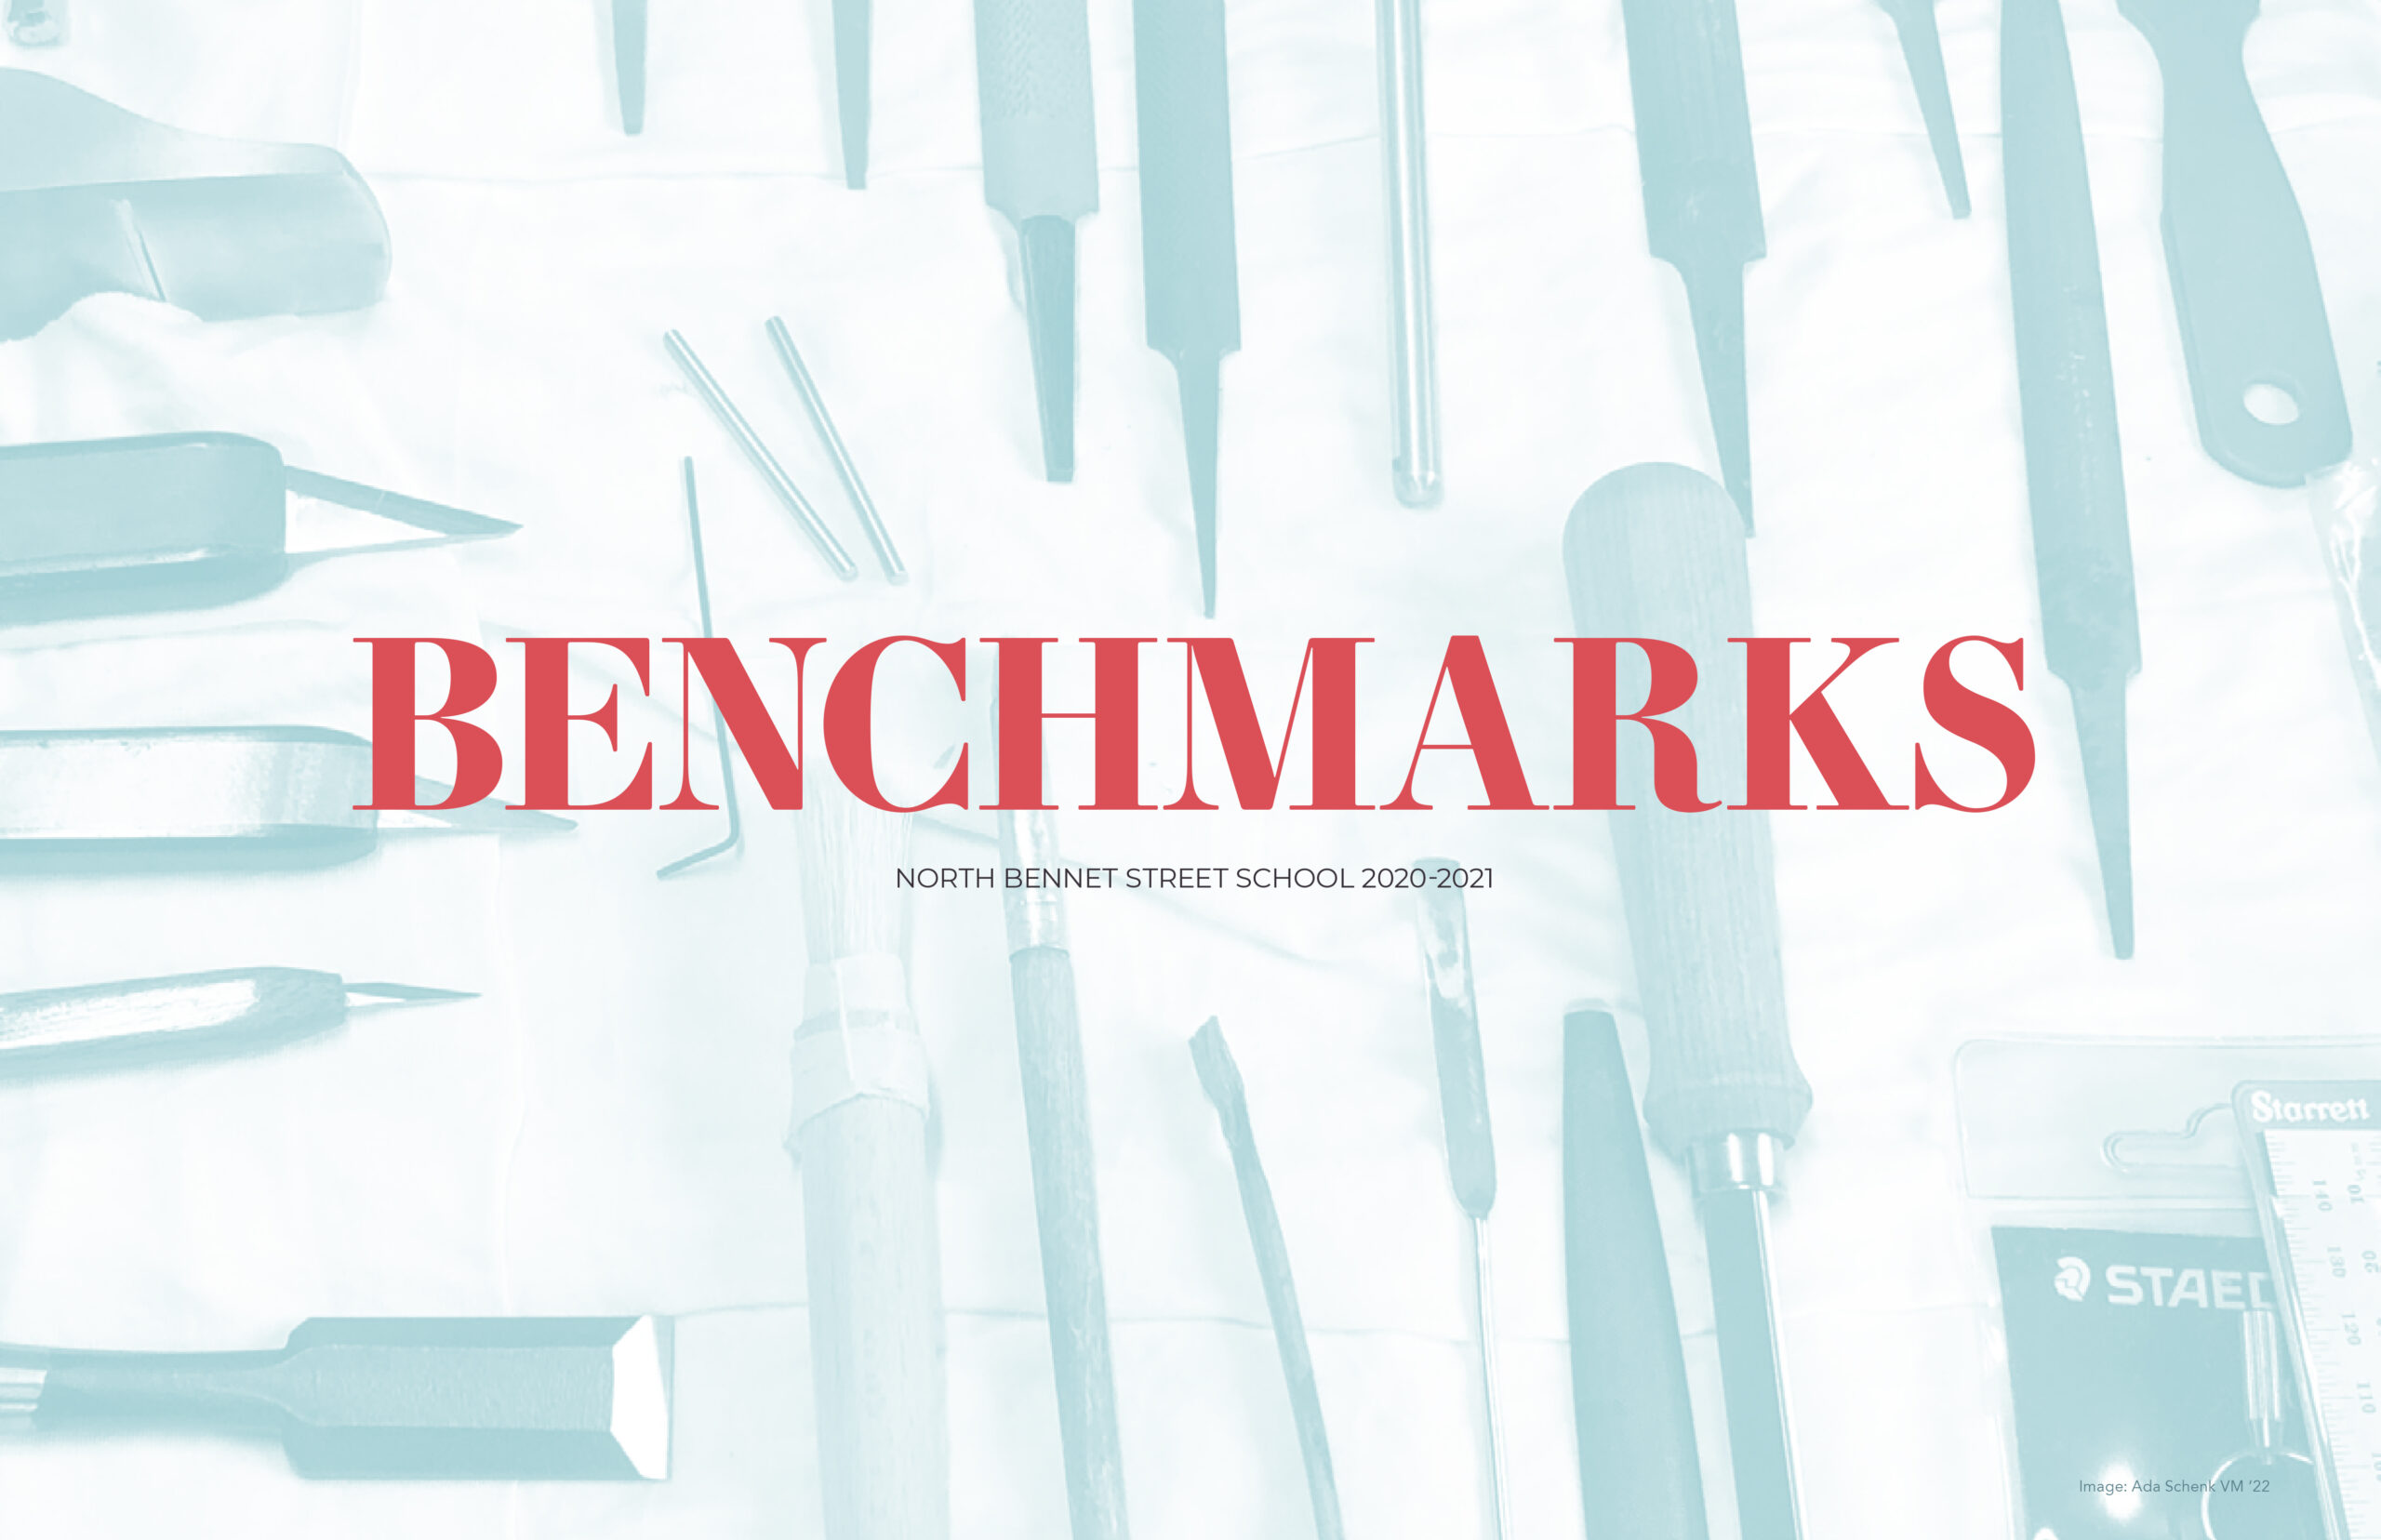 Benchmarks Summer 2020